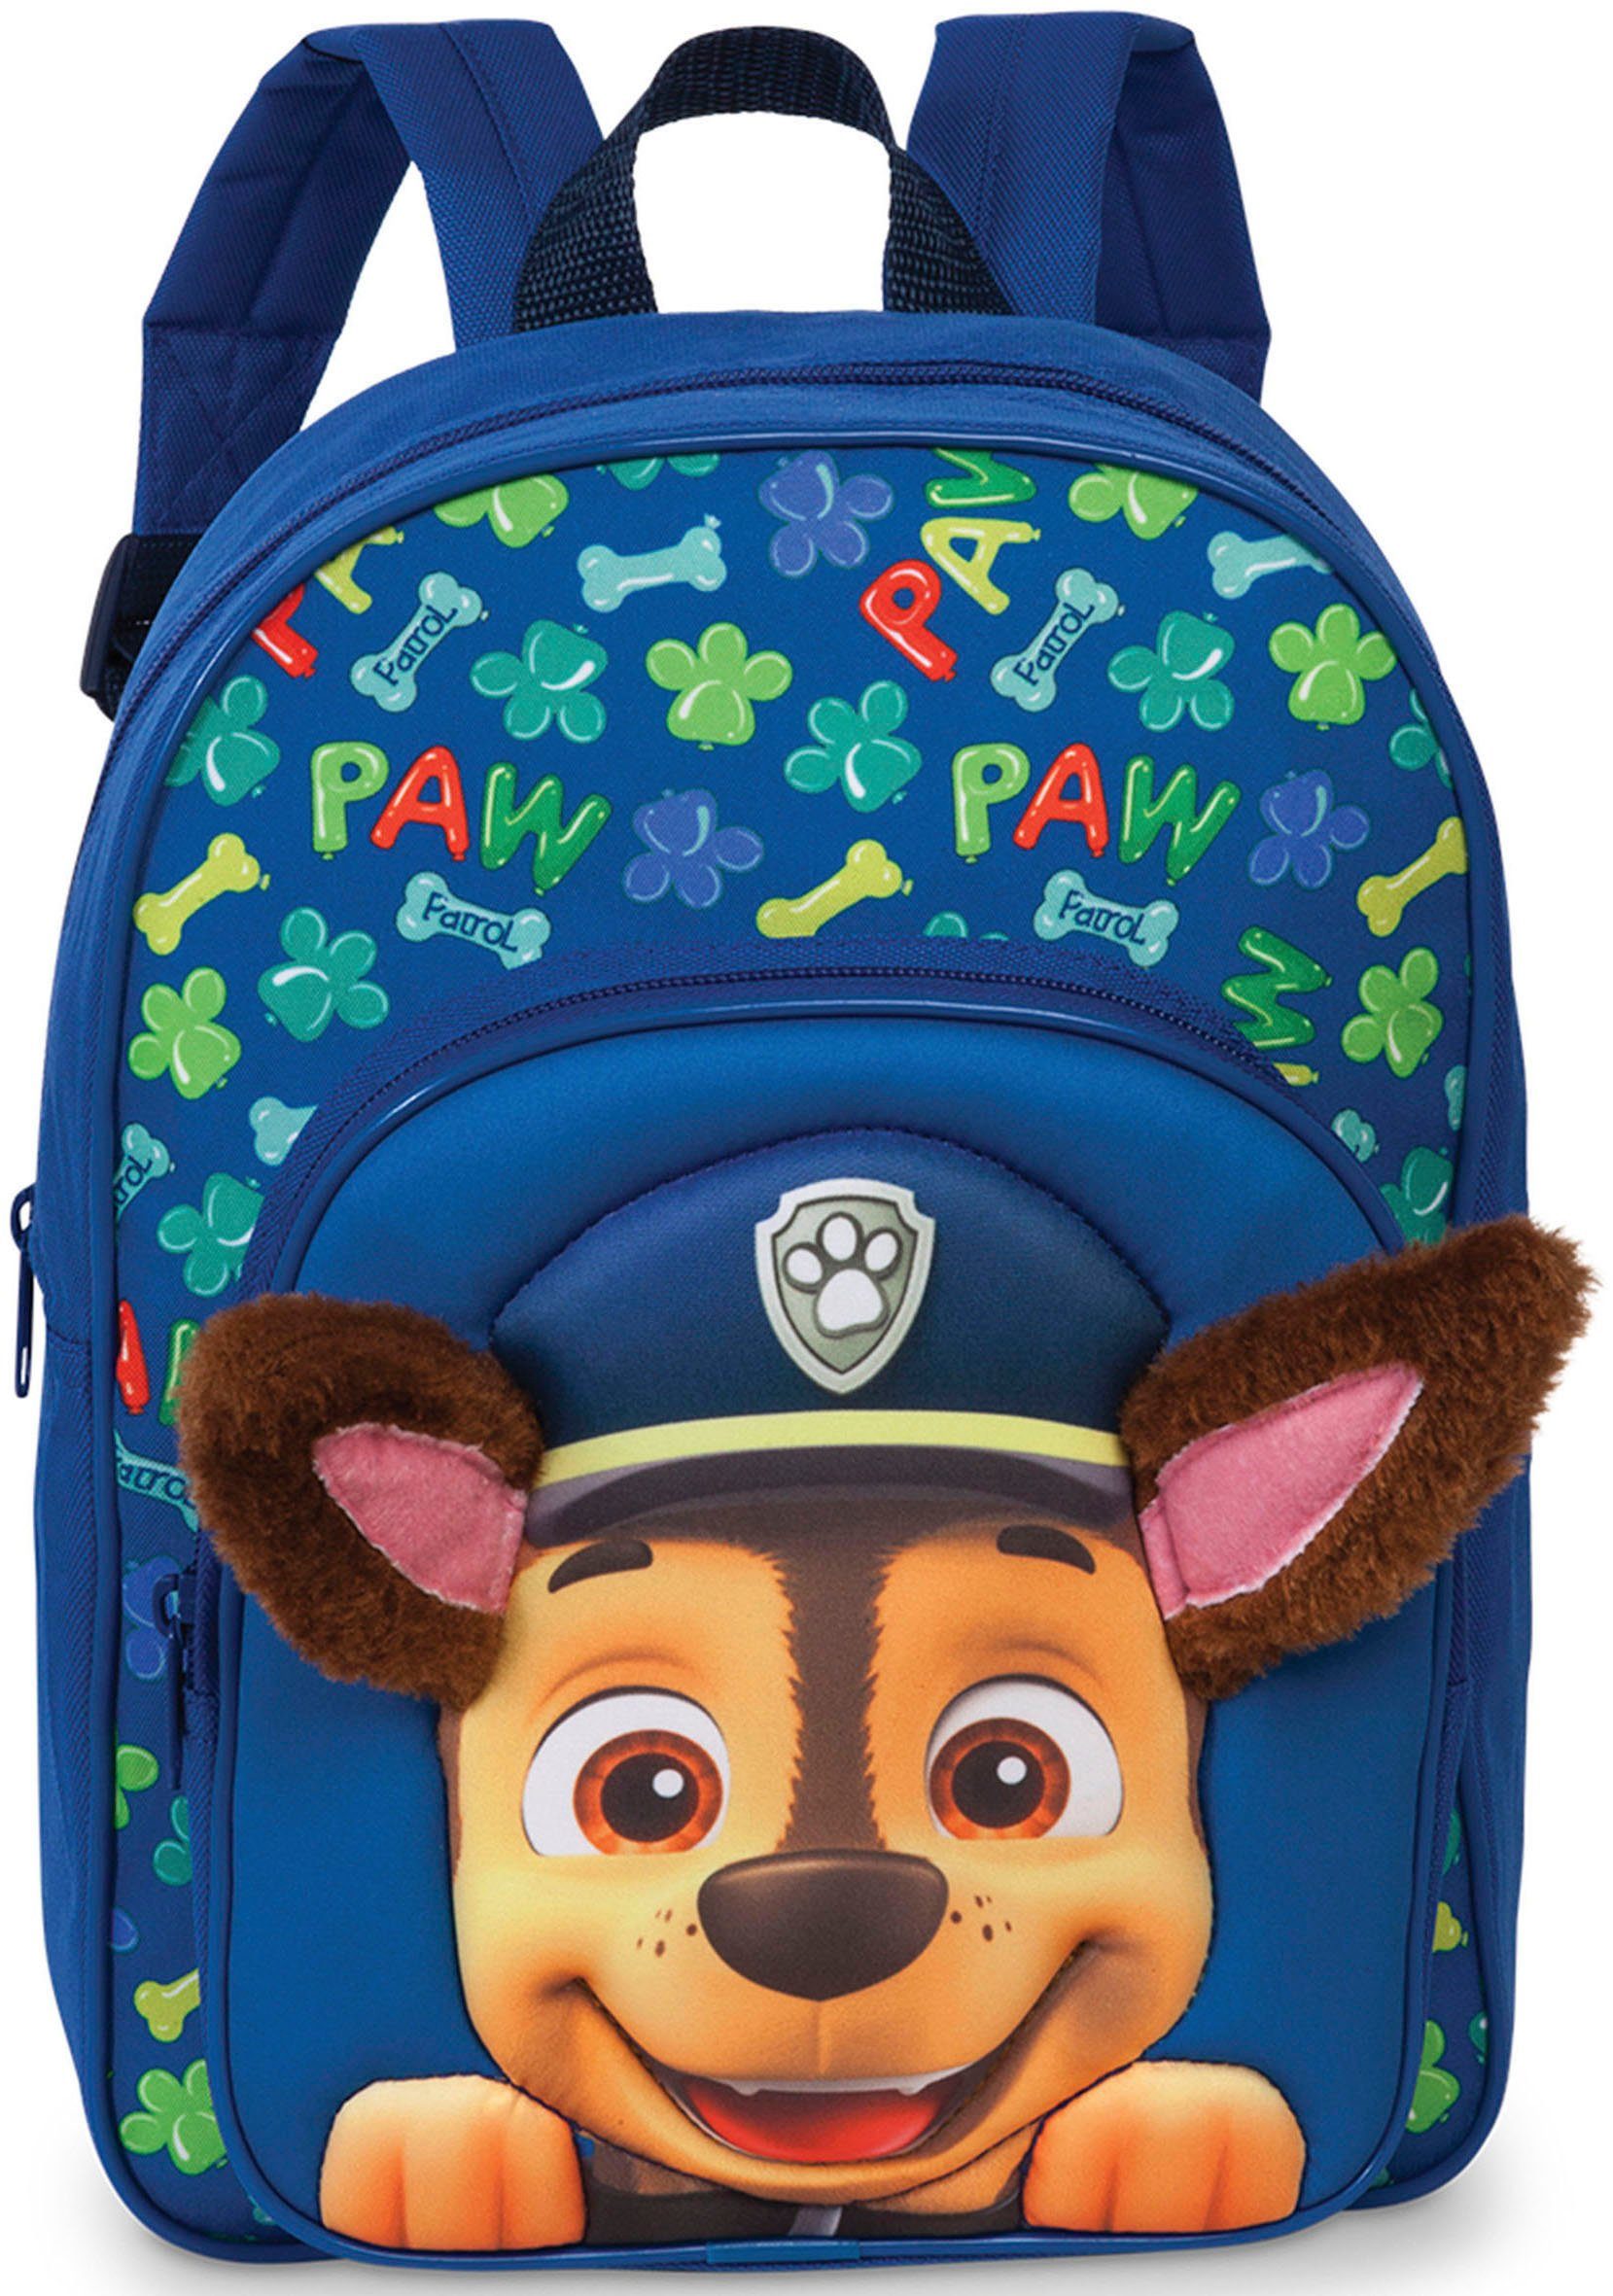 fabrizio® Kinderrucksack Viacom, Paw Patrol, royalblau, Kleinkindrucksack Kindergartenrucksack Mini-Rucksack